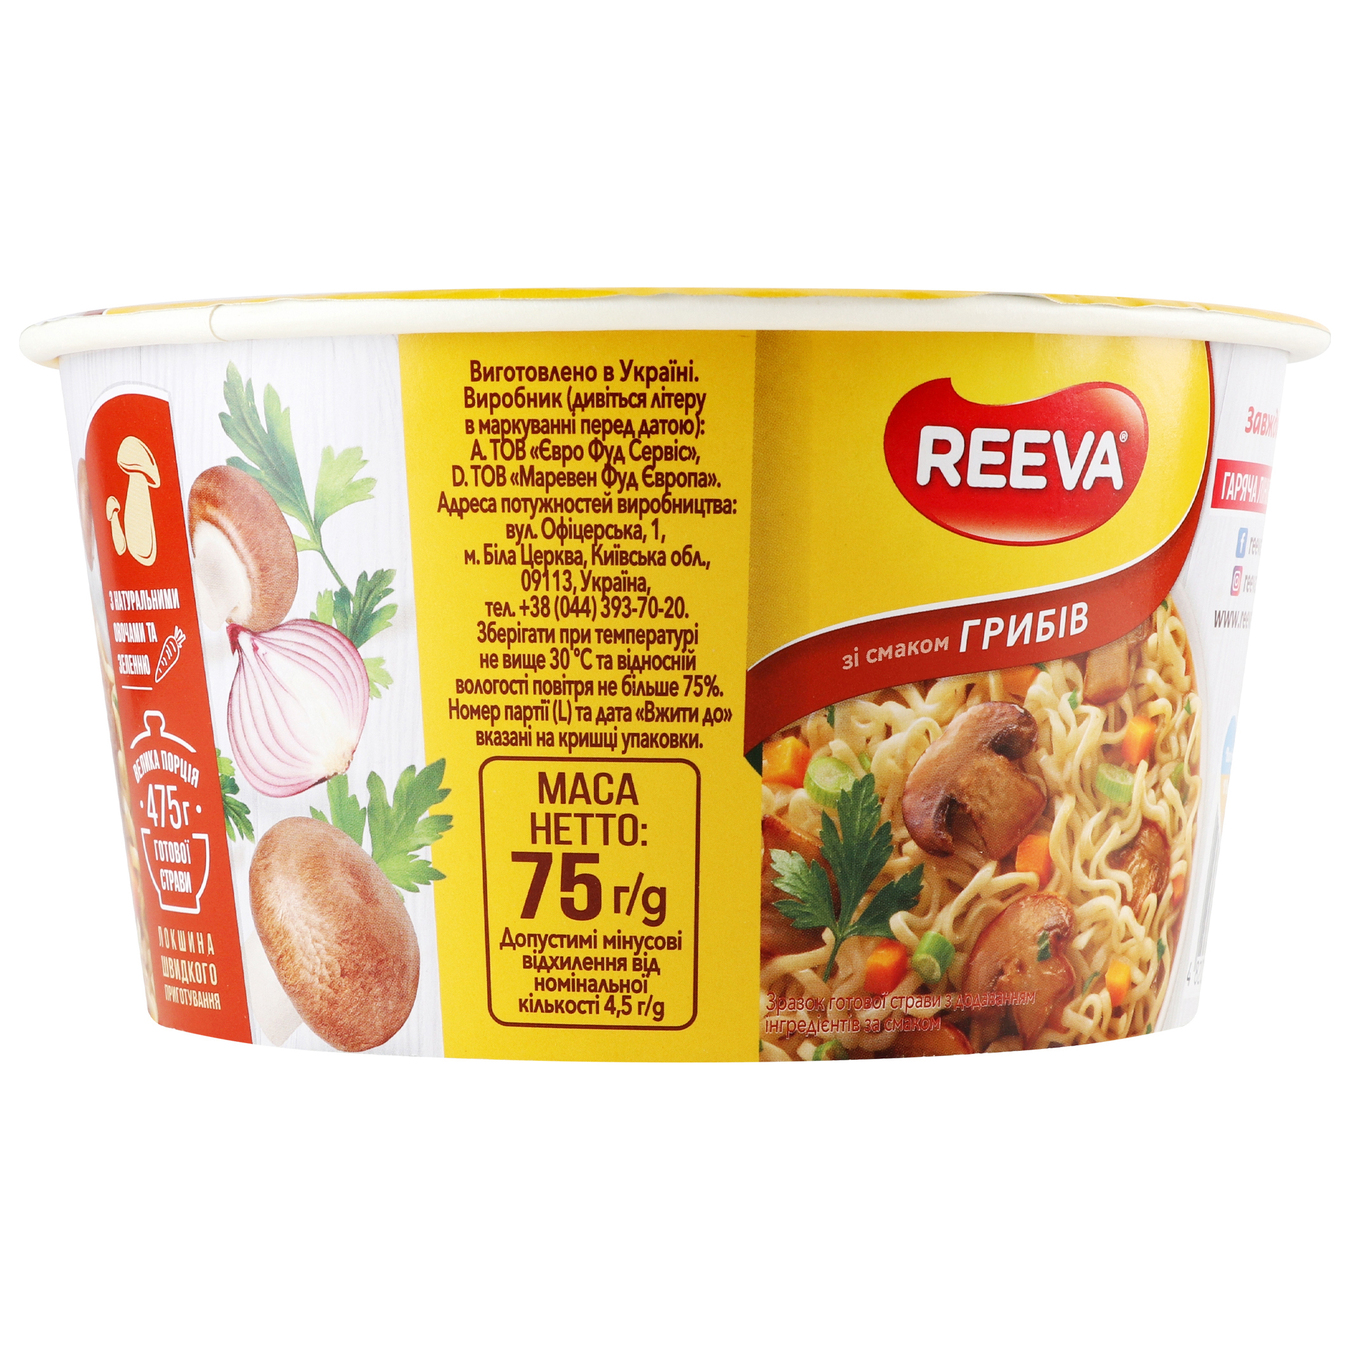 Instant Reeva noodles with mushroom flavor 75g 5